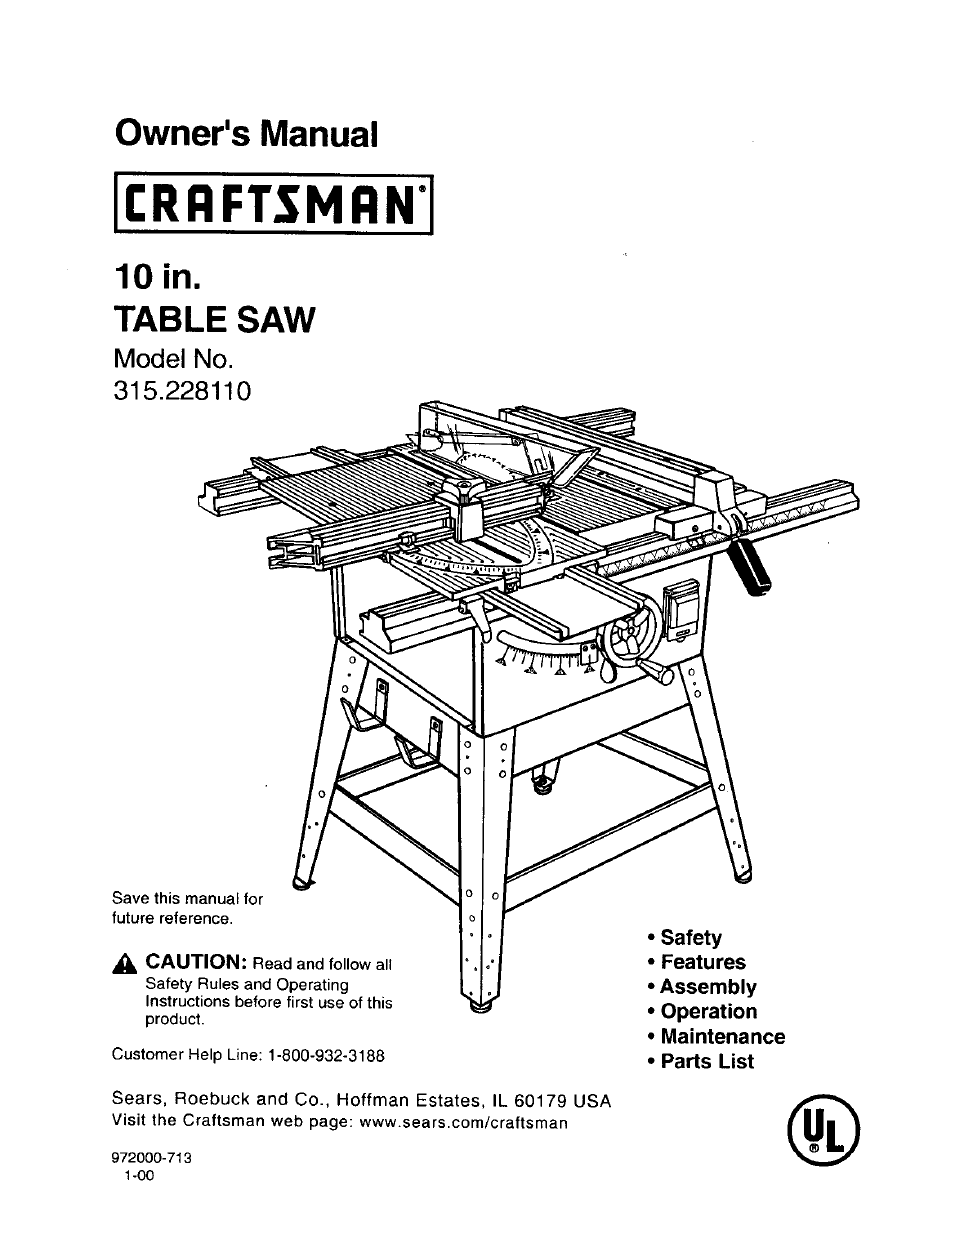 Craftsman 315.228110 User Manual | 54 pages